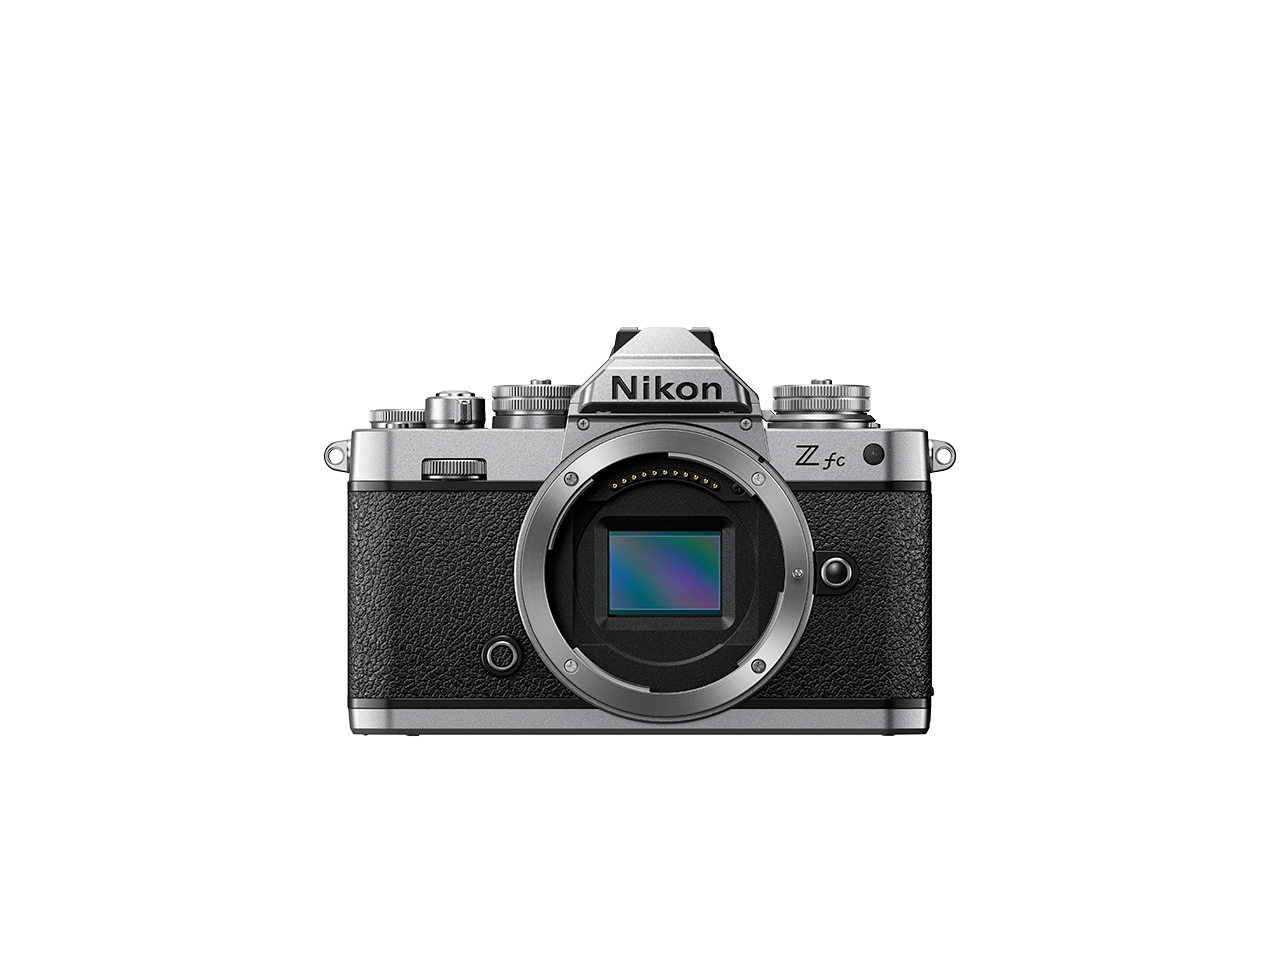 Nikon 1671 20.9 million Monitor Size: 3.0 in. diagonal LCD Compact Mirrorless System Camera